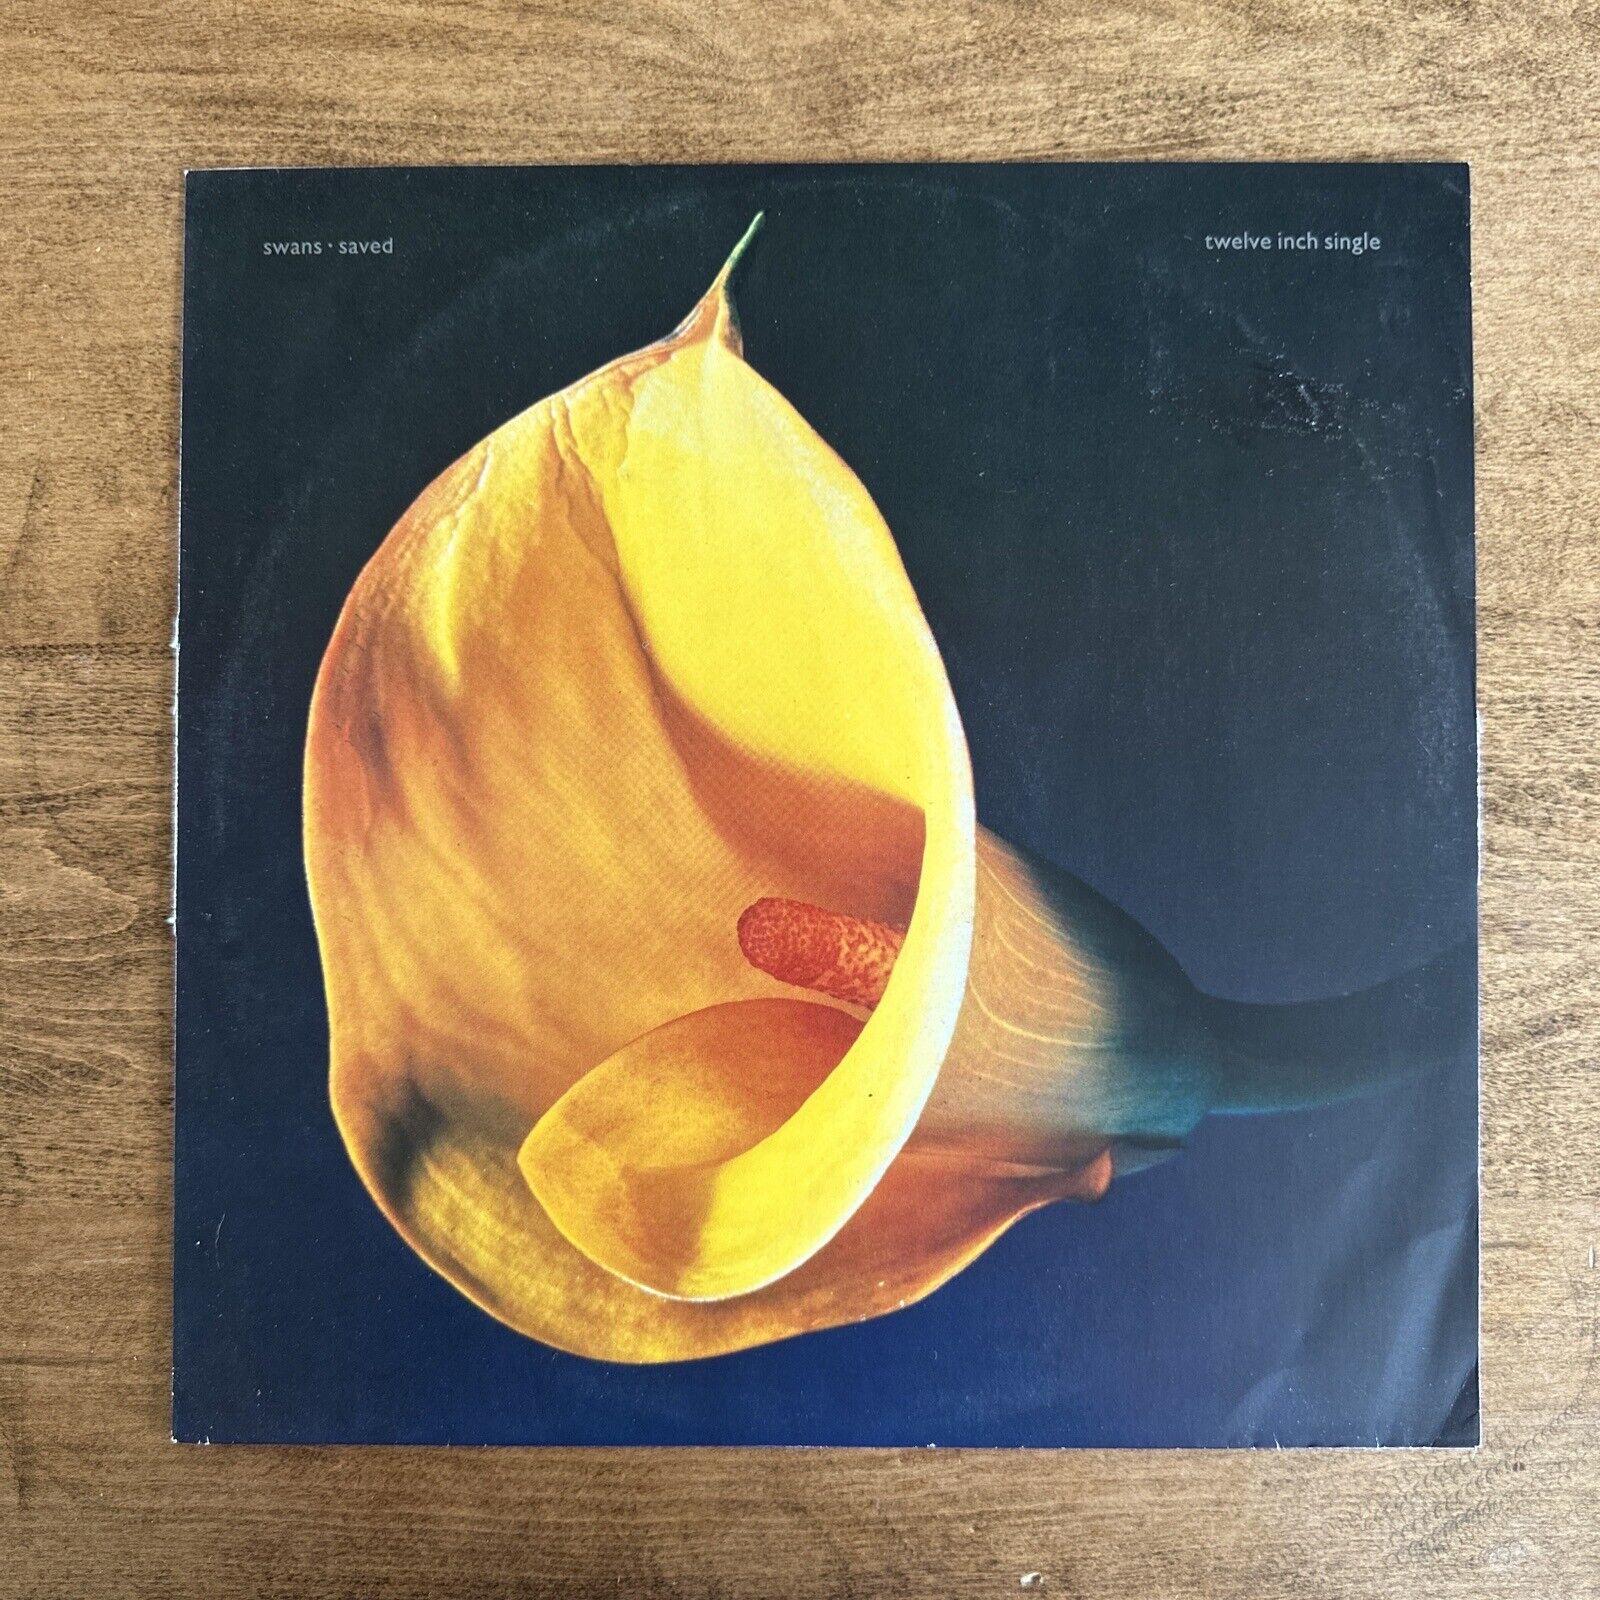 Swans (Saved) 1989 - Vinyl Record